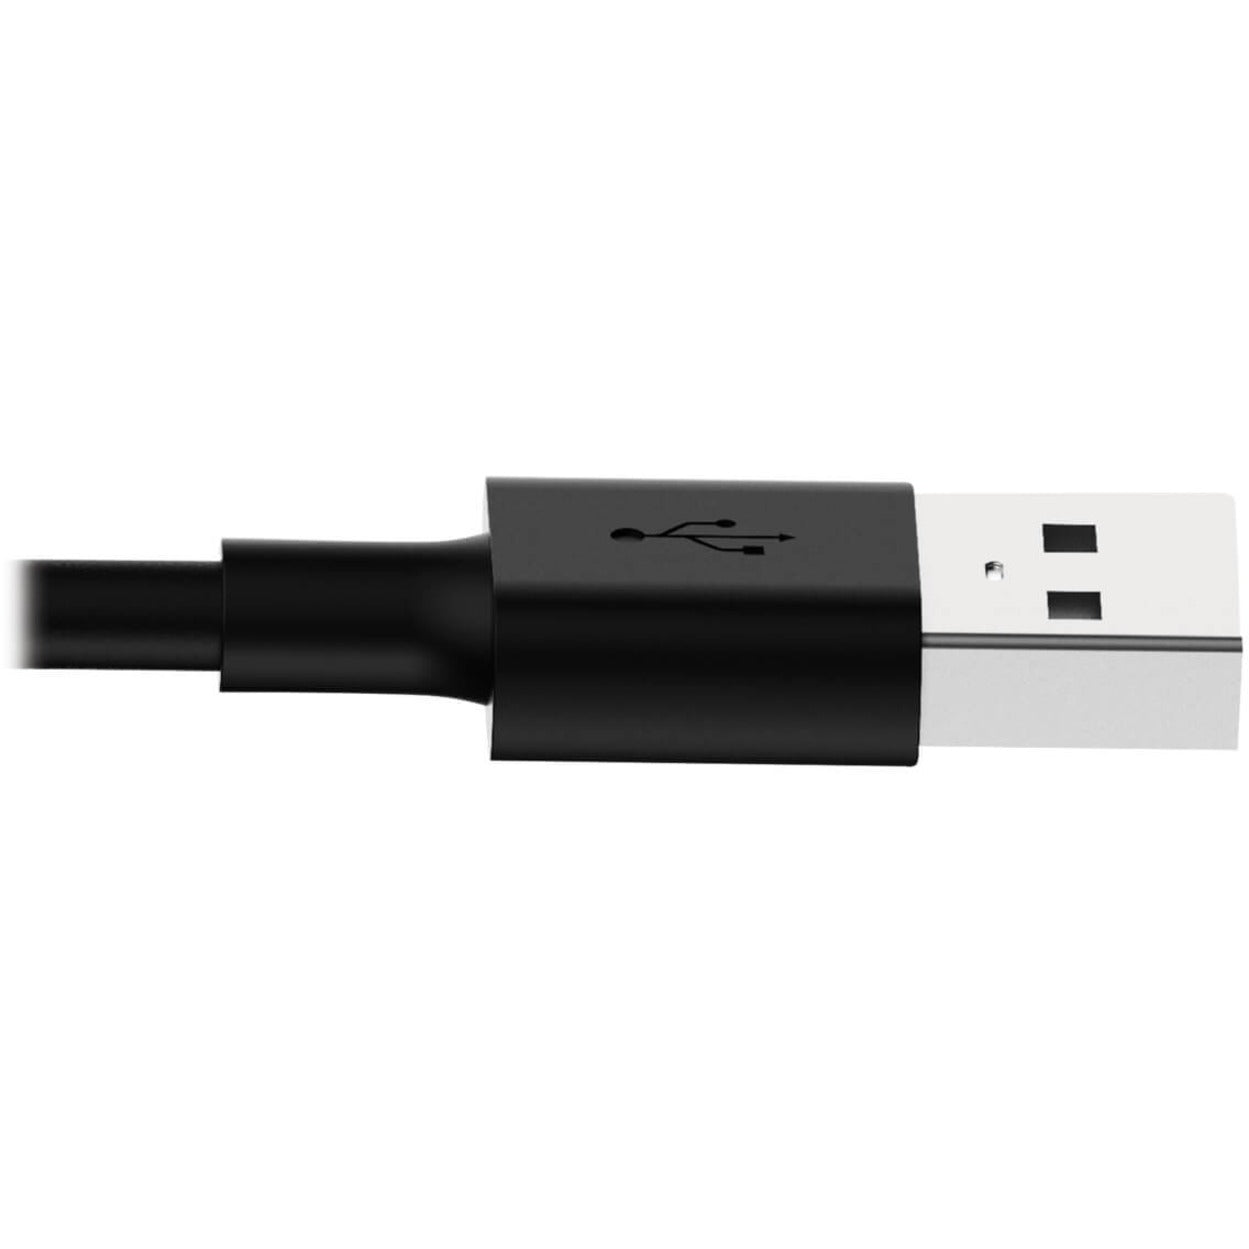 Tripp Lite M100-006-BK 6ft (1.8M) Schwarzes USB Sync / Ladekabel mit Lightning-Anschluss Kompatibel mit iPhone iPad iPod MFI-zertifiziert